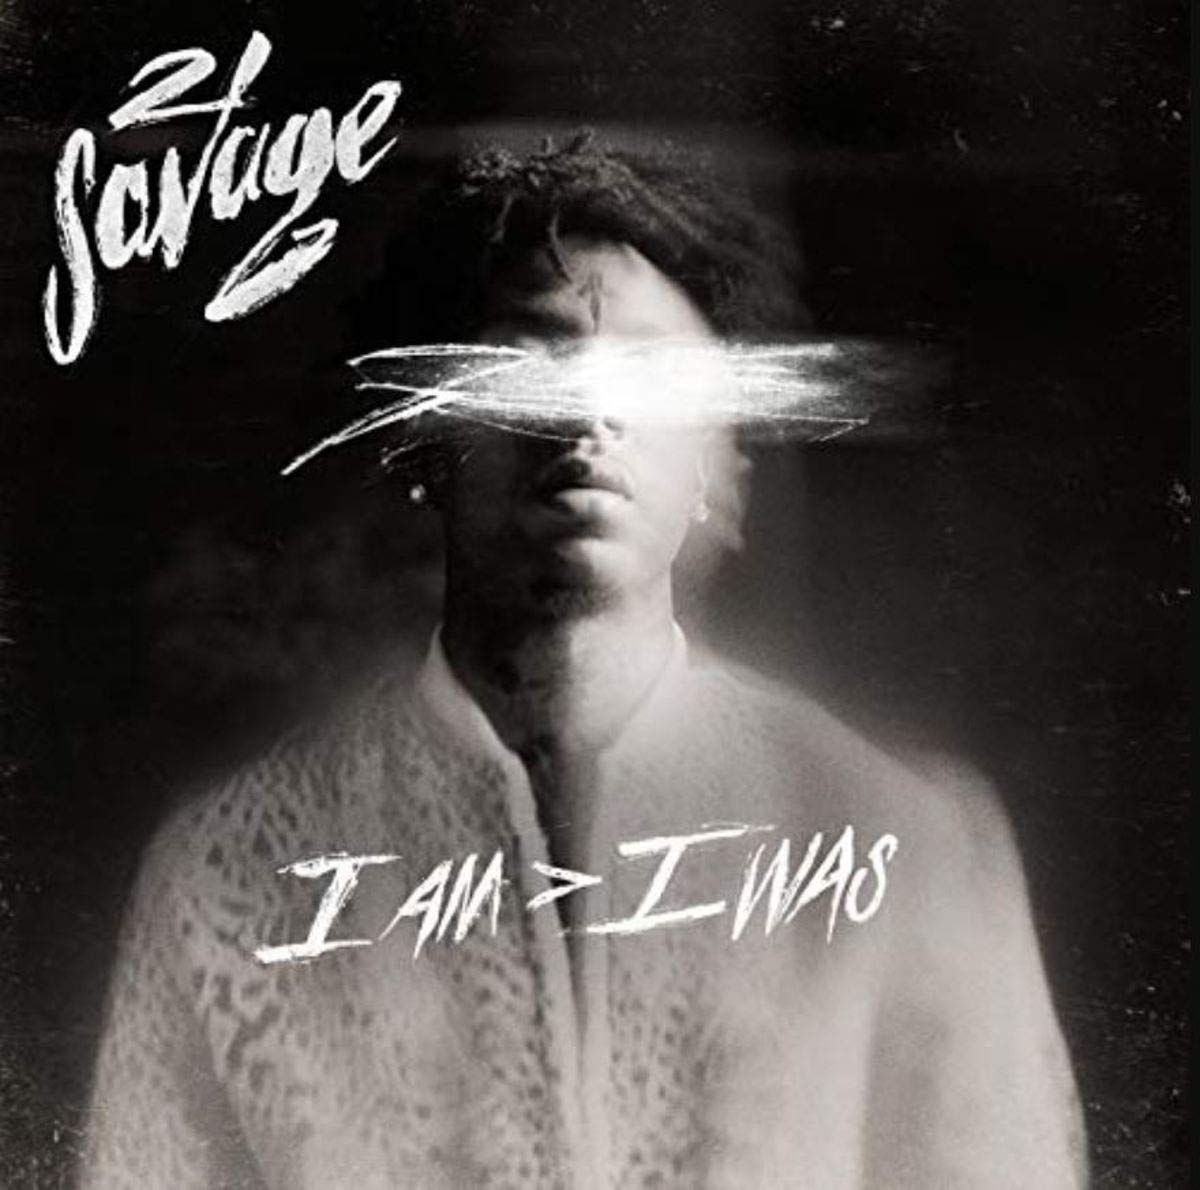 21 Savage/I Am I Was [LP]